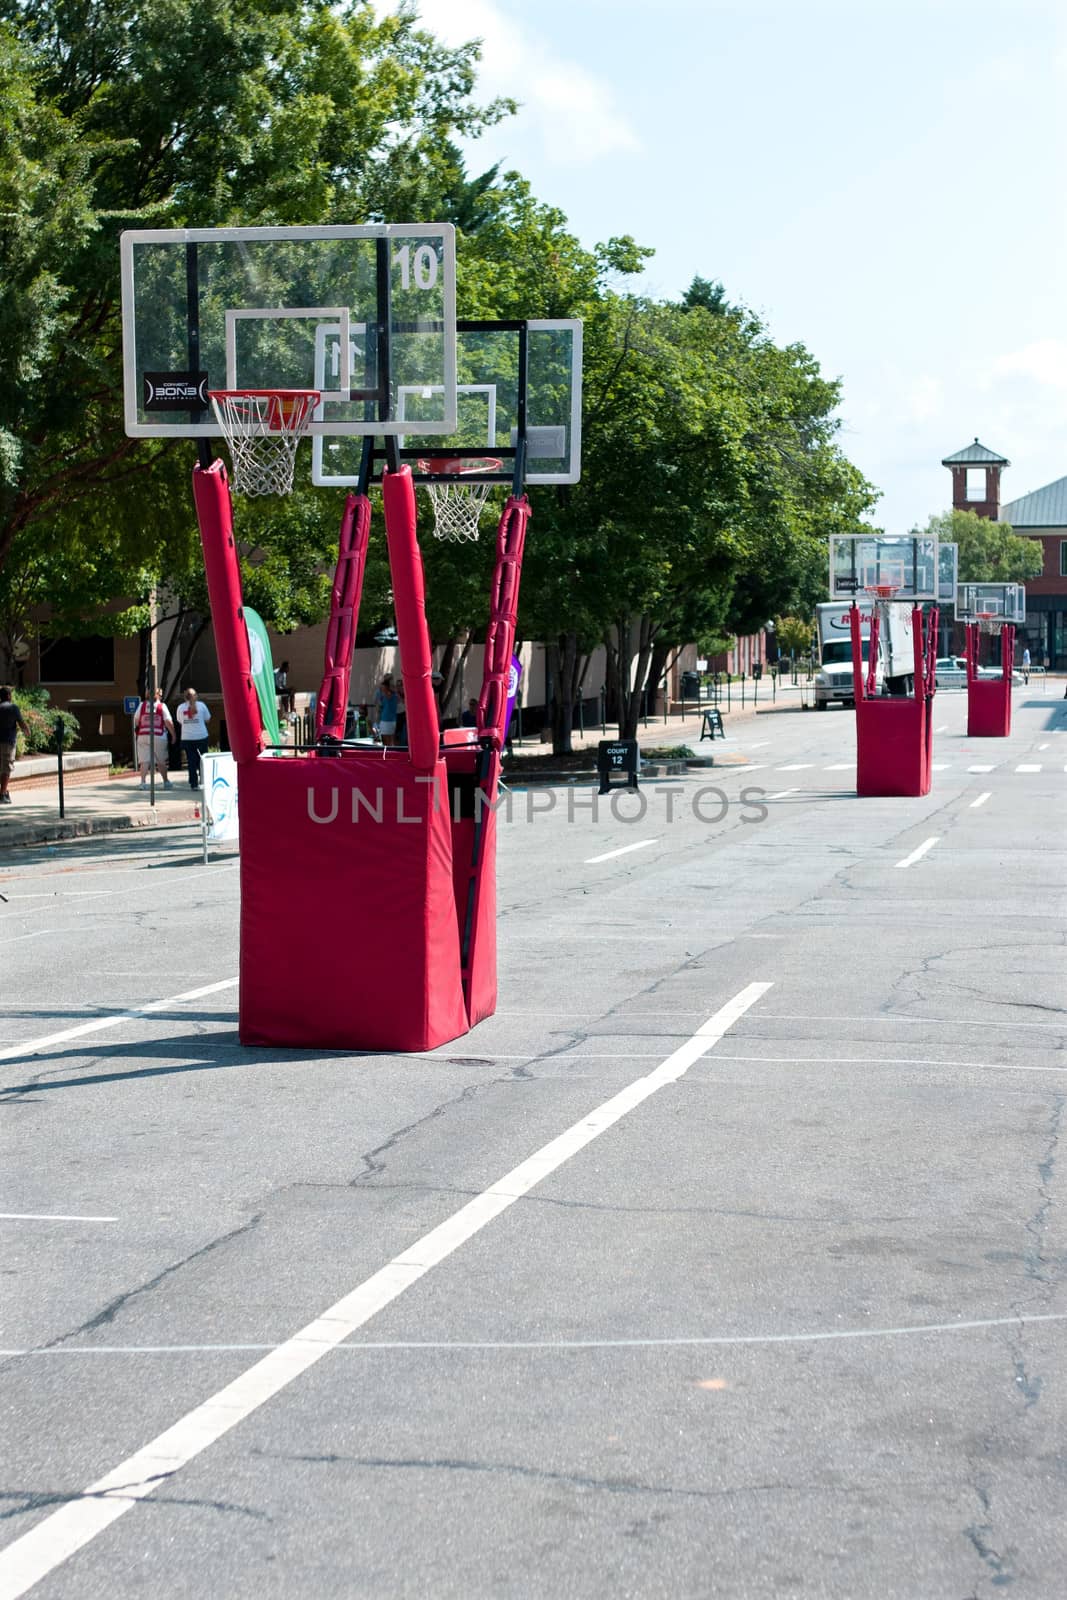 Basketball Goals Set Up On City Street For Outdoor Tournament by BluIz60